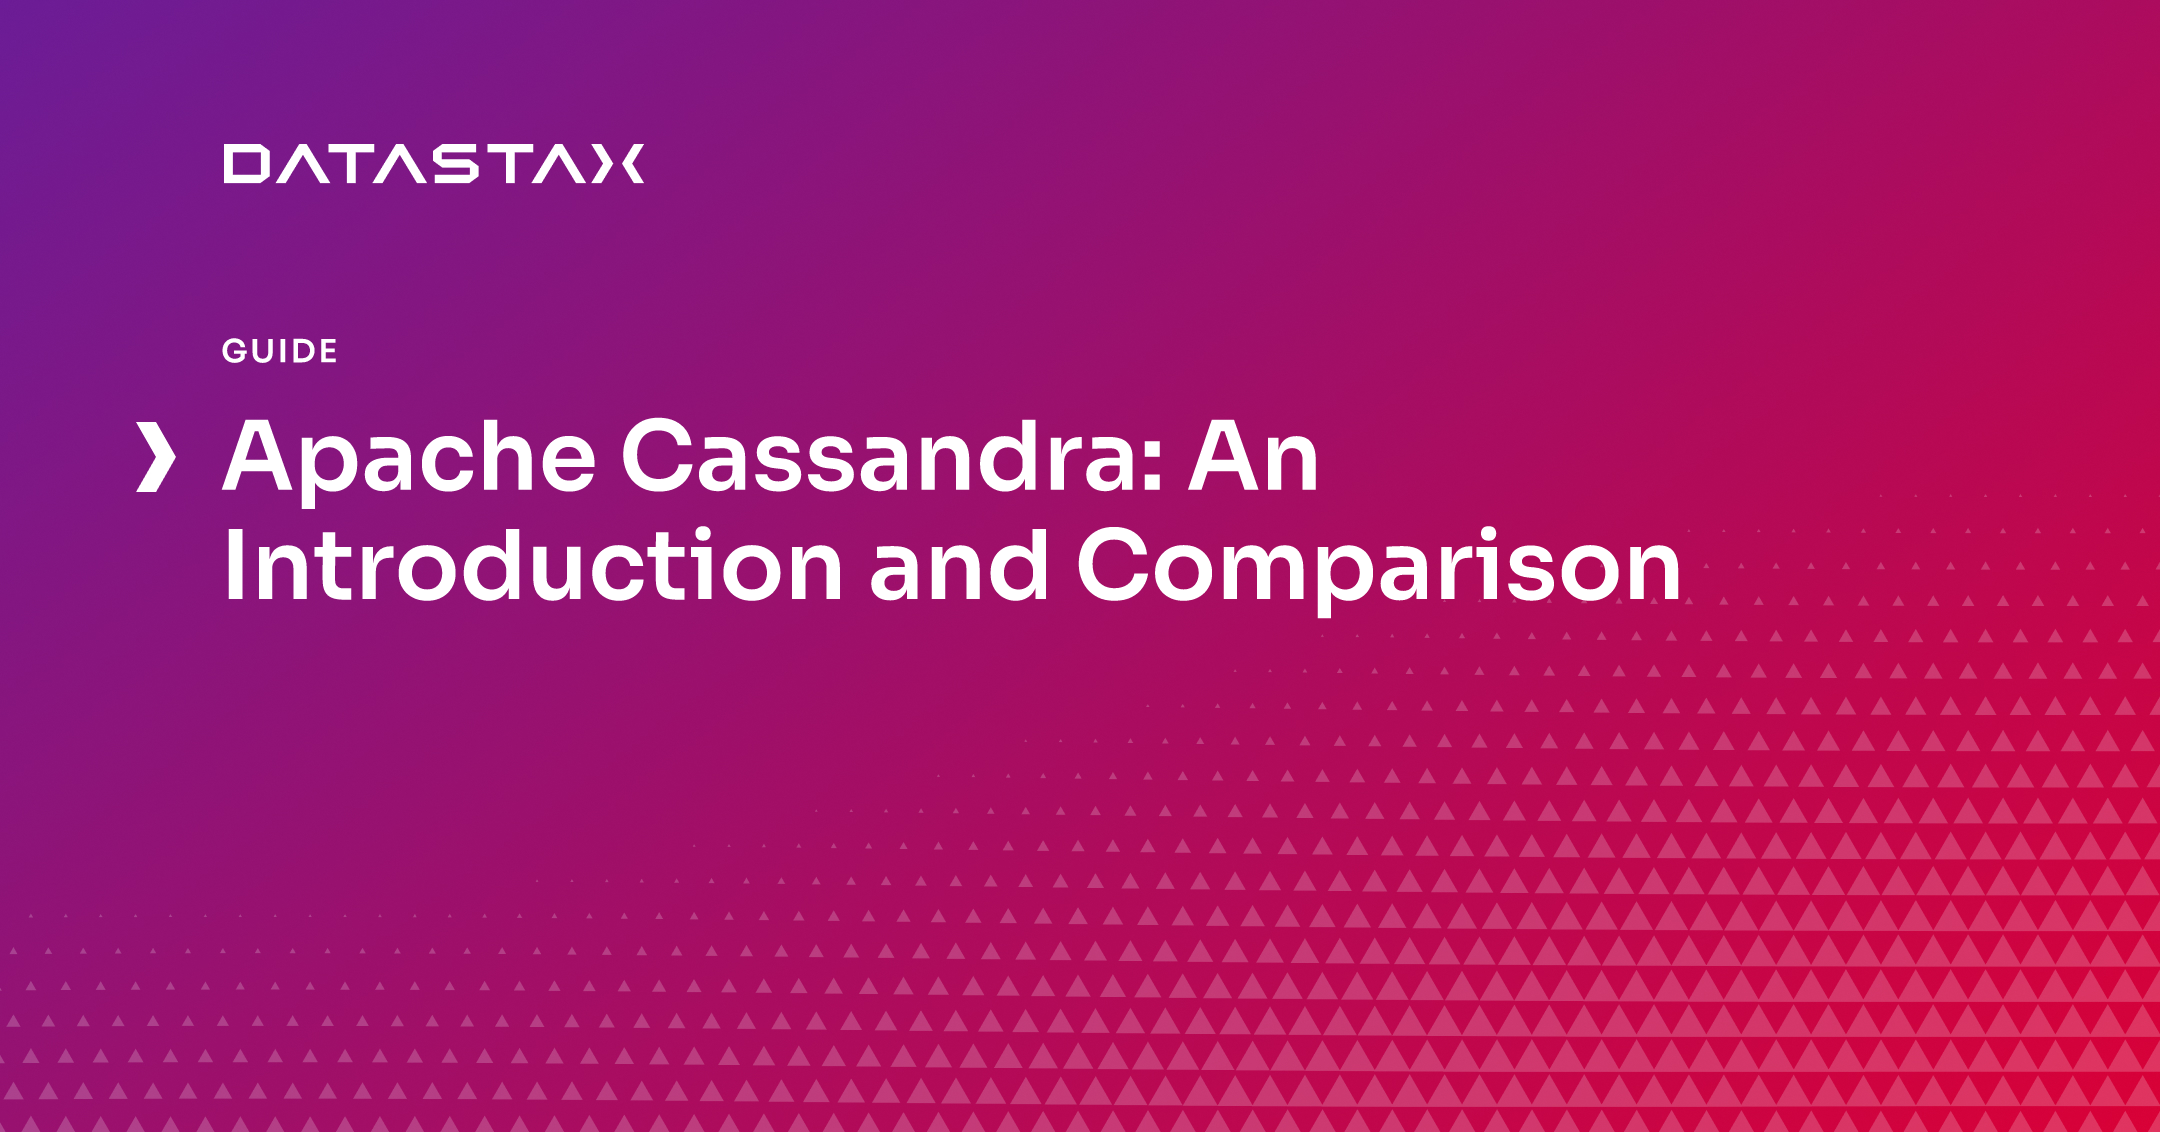 Apache Cassandra: An Introduction and Comparison